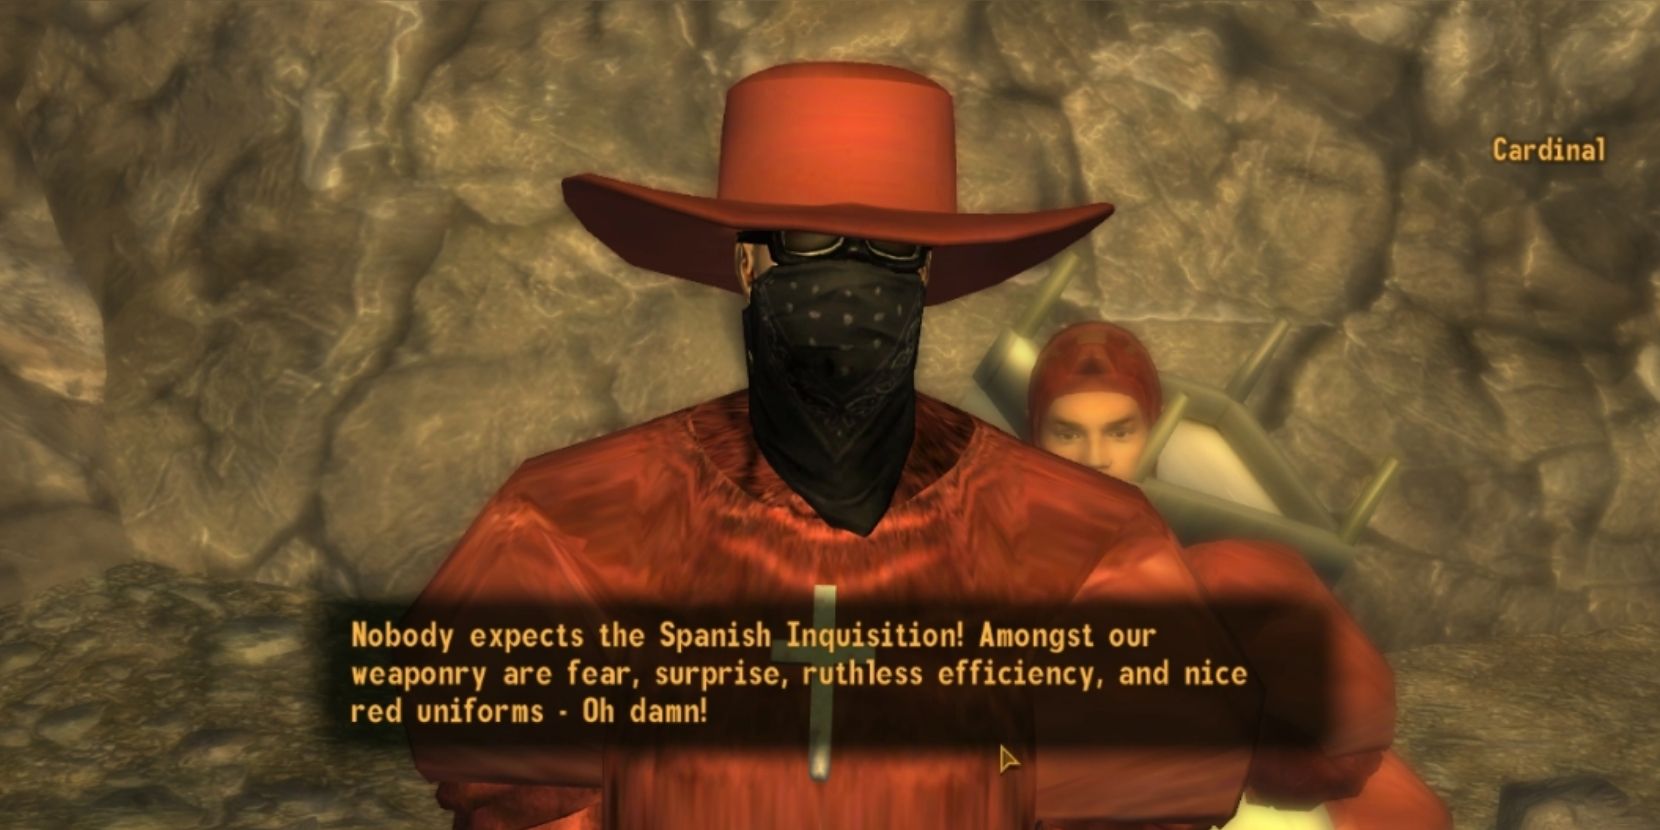 new vegas spanish inquisition monty python quote